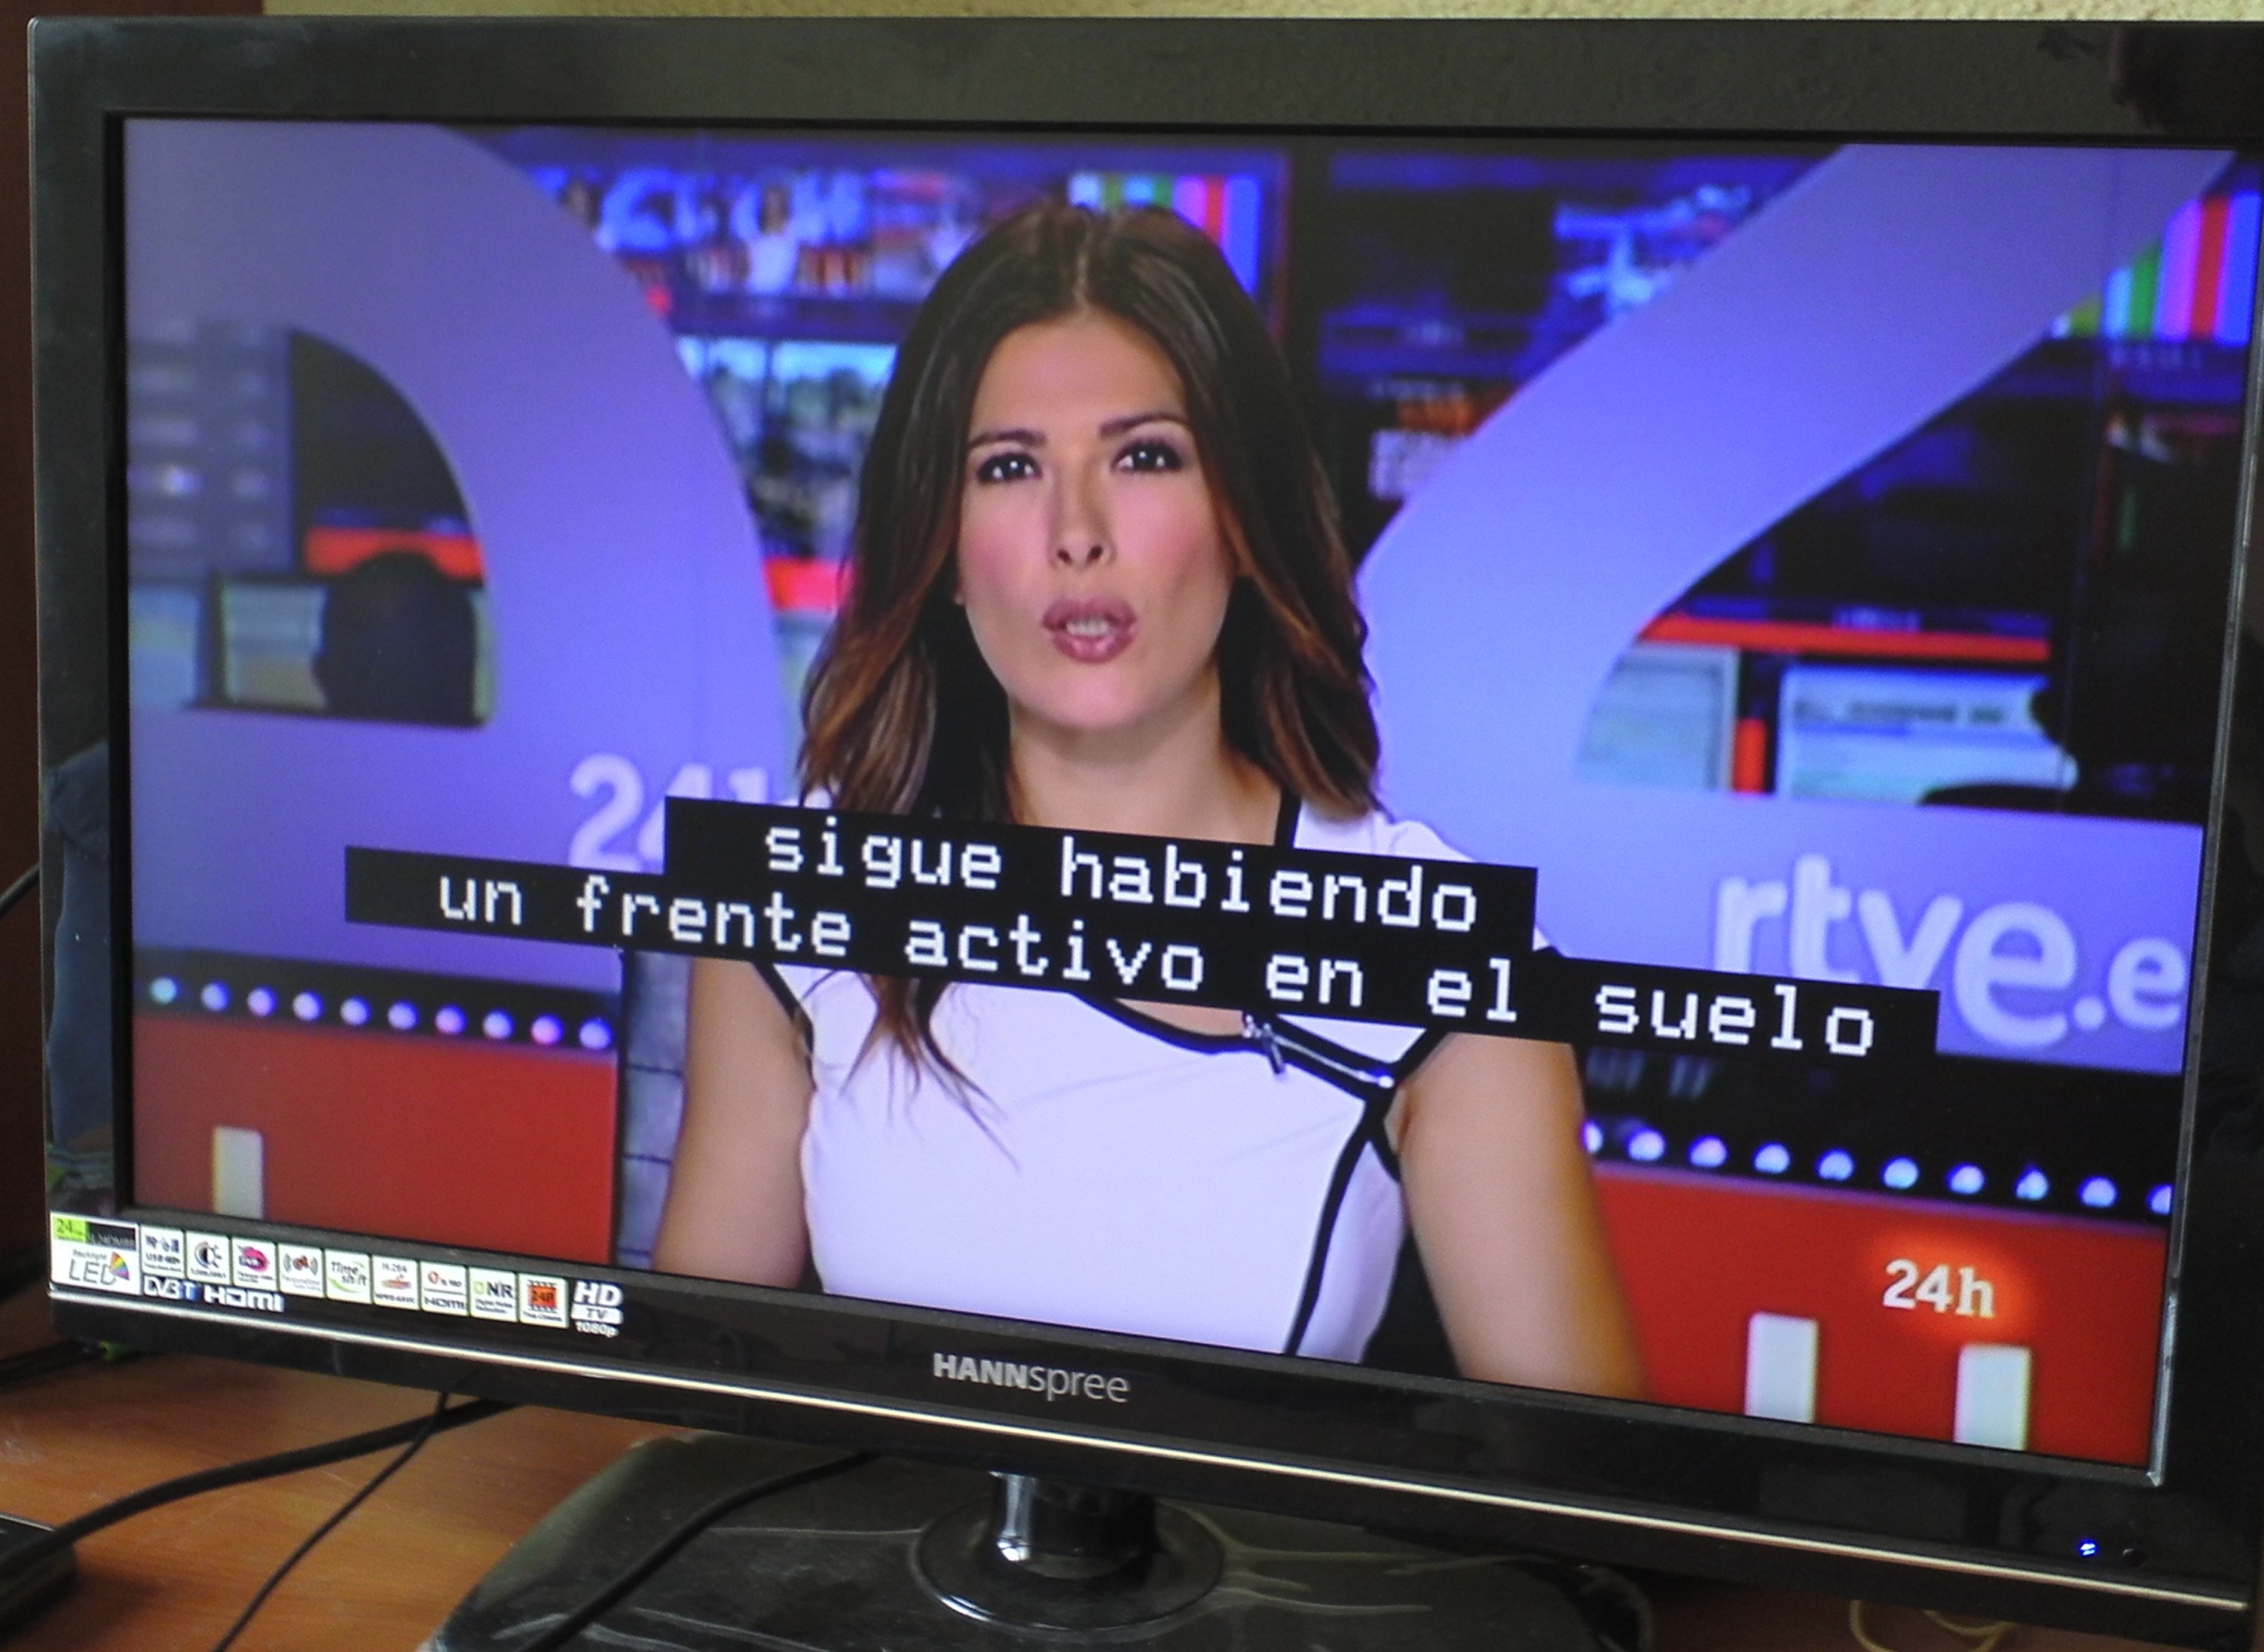 zetrader nouvelle tv espagnole tnt espagnole tdt hd tv 1080p vga hdmi usb sous titres espagnols